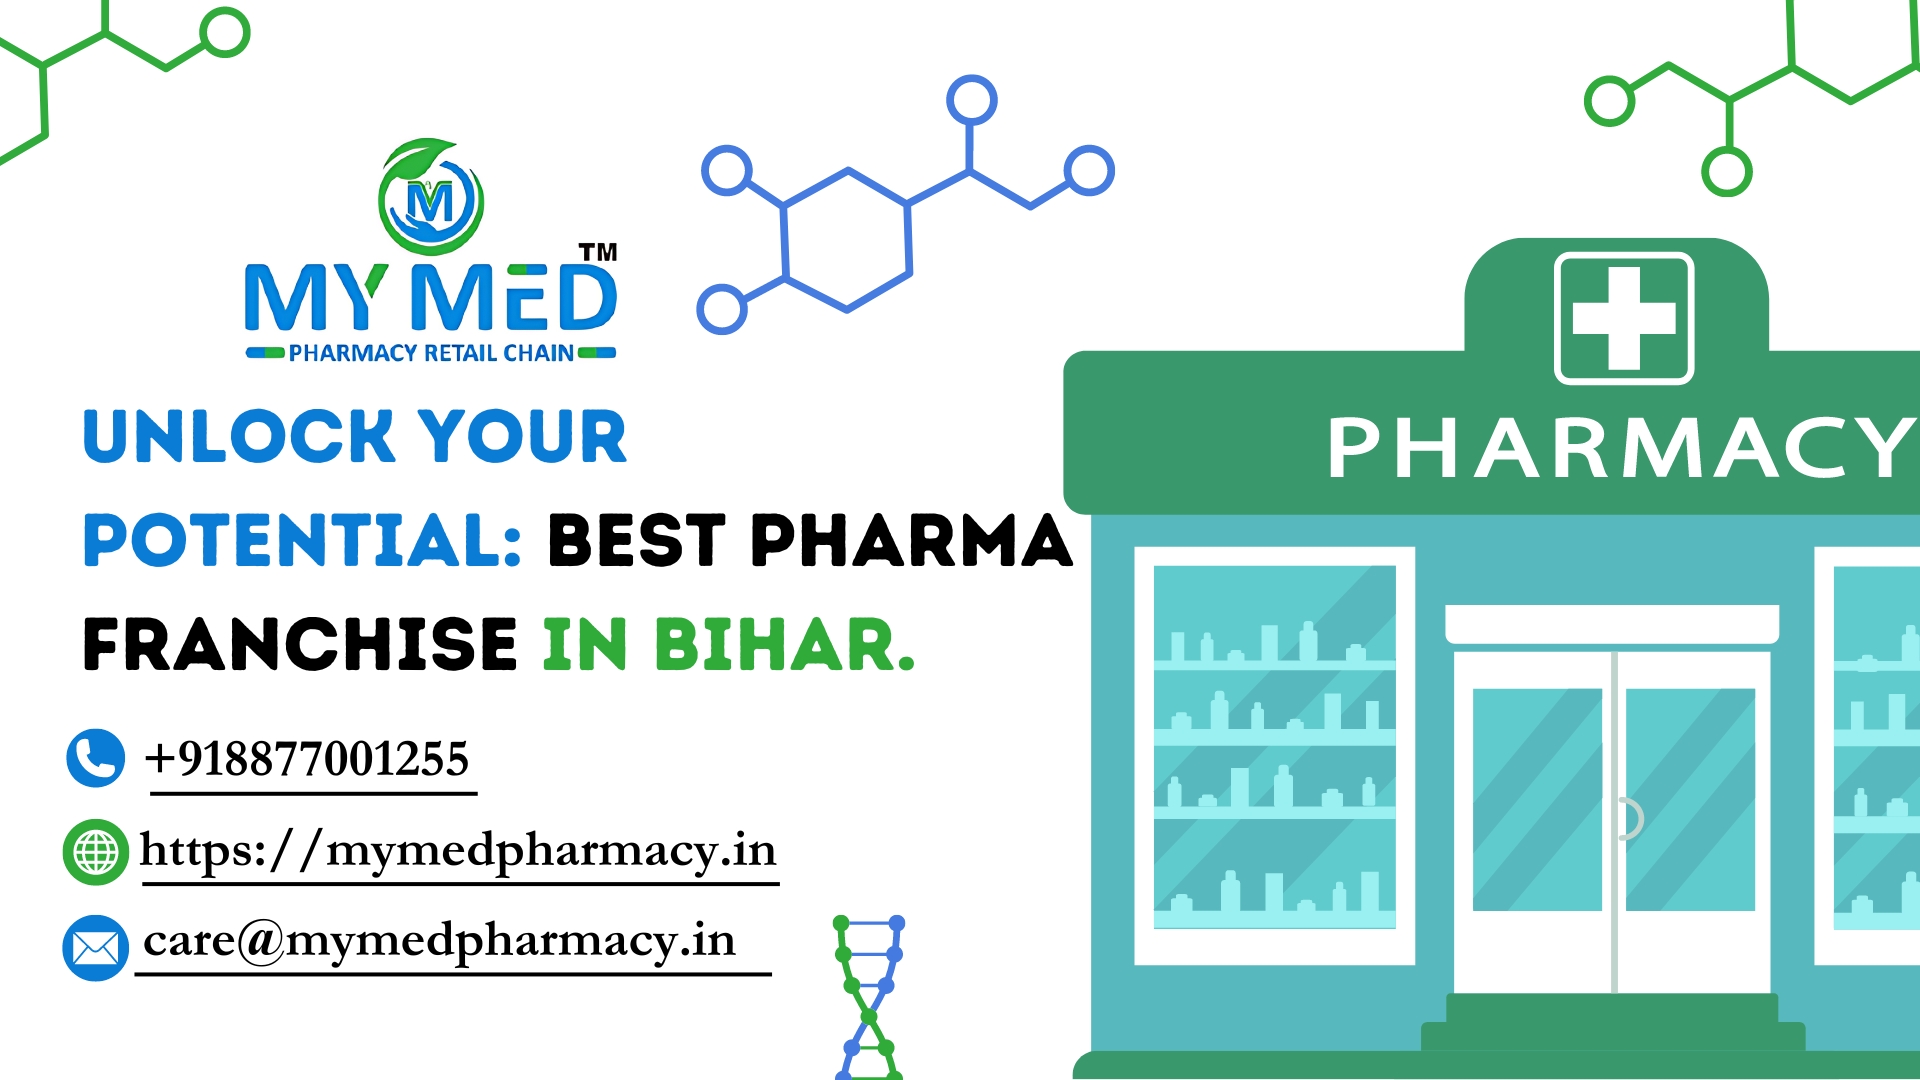 MyMed Pharmacy Unlock Your Potential: Best Pharma Franchise in Bihar